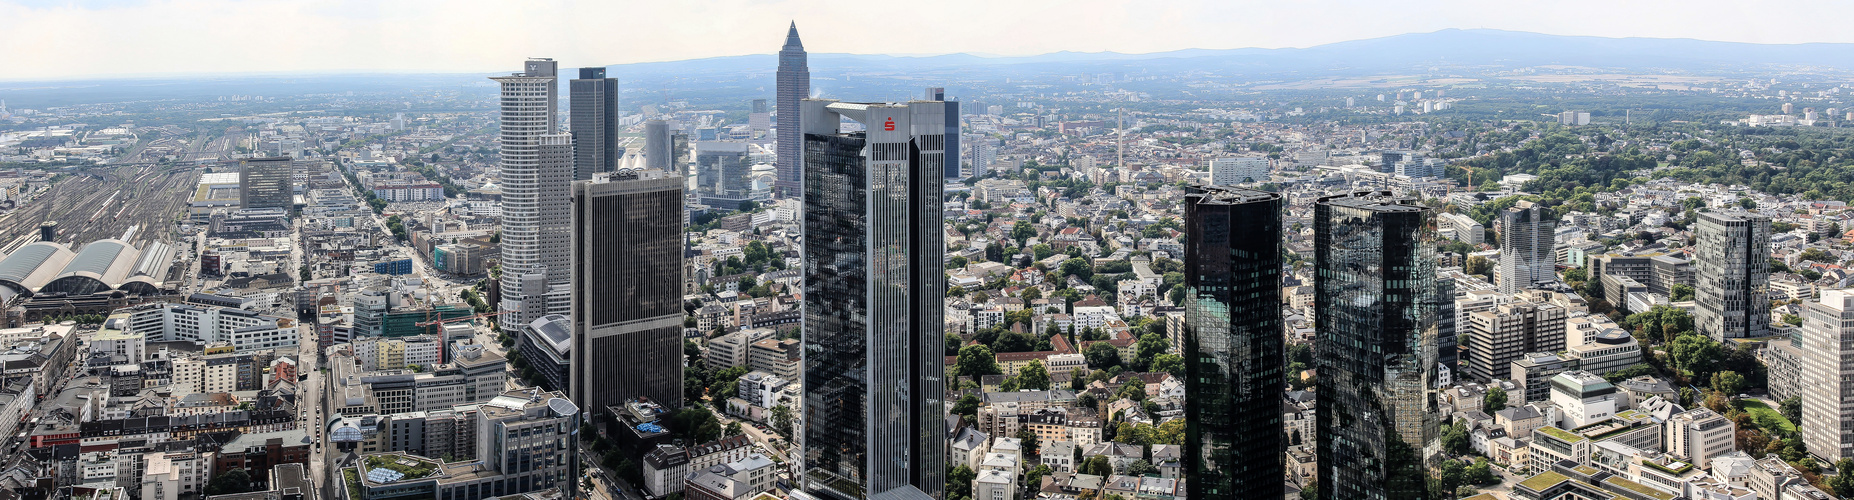 Panoramablick auf Frankfurt